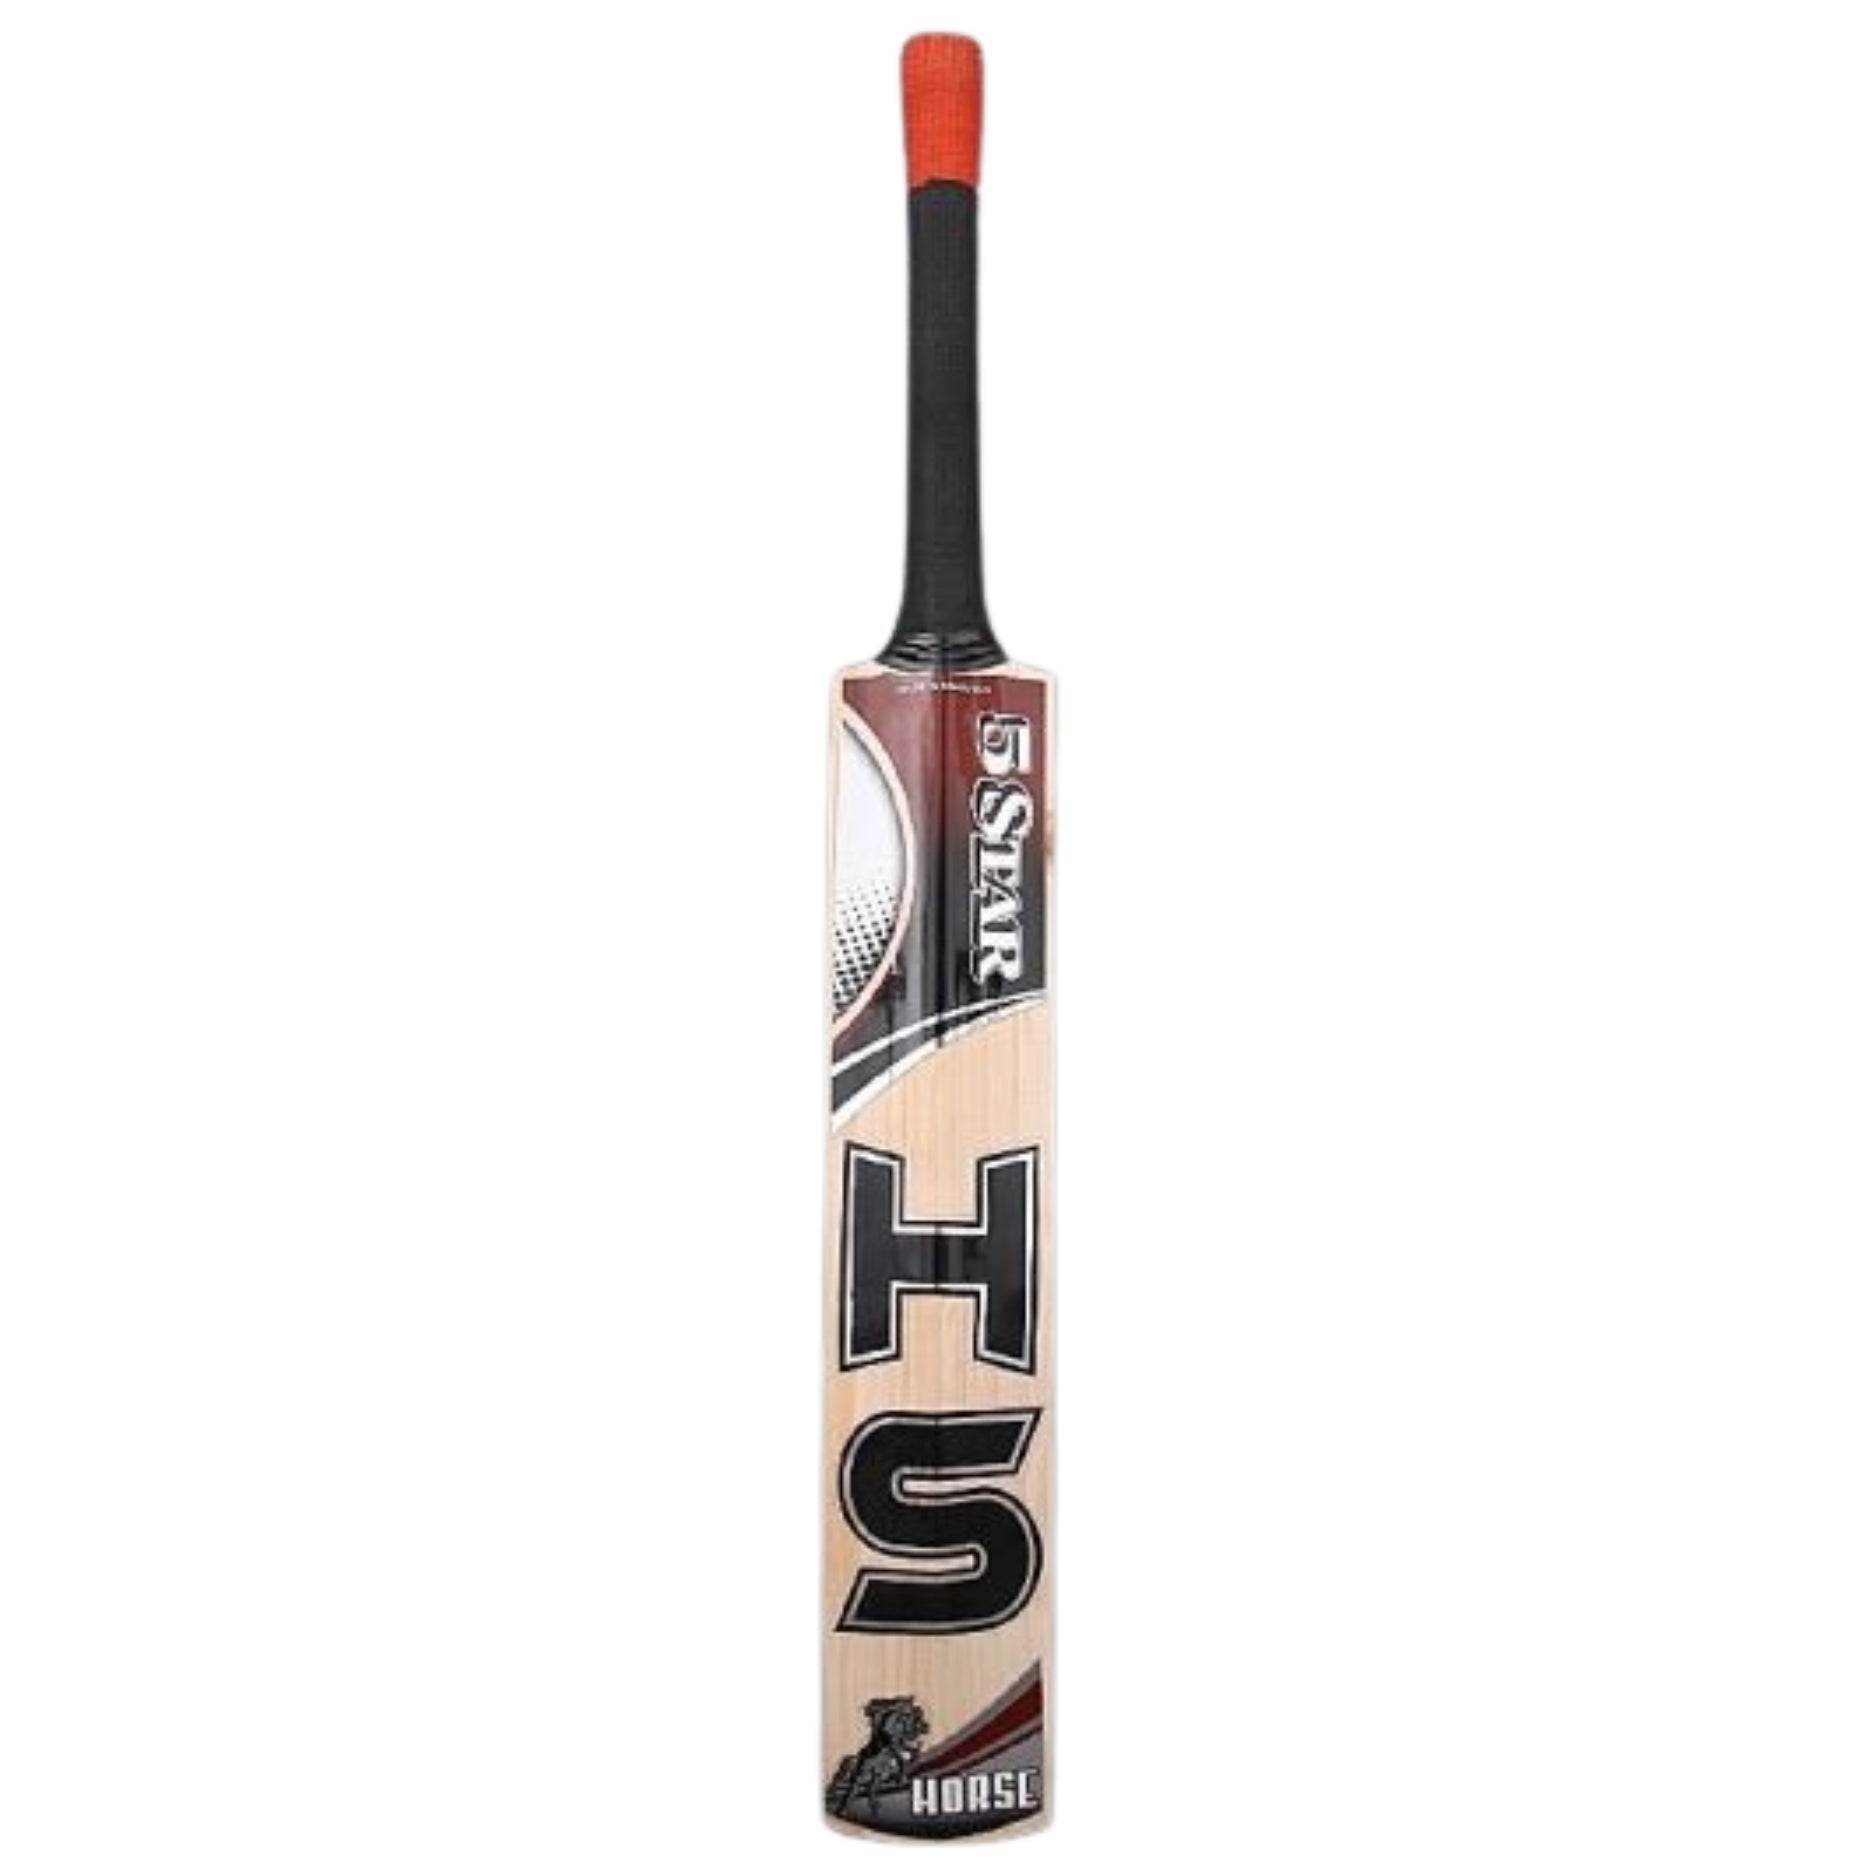 HS 5-Star English Willow Cricket Bat